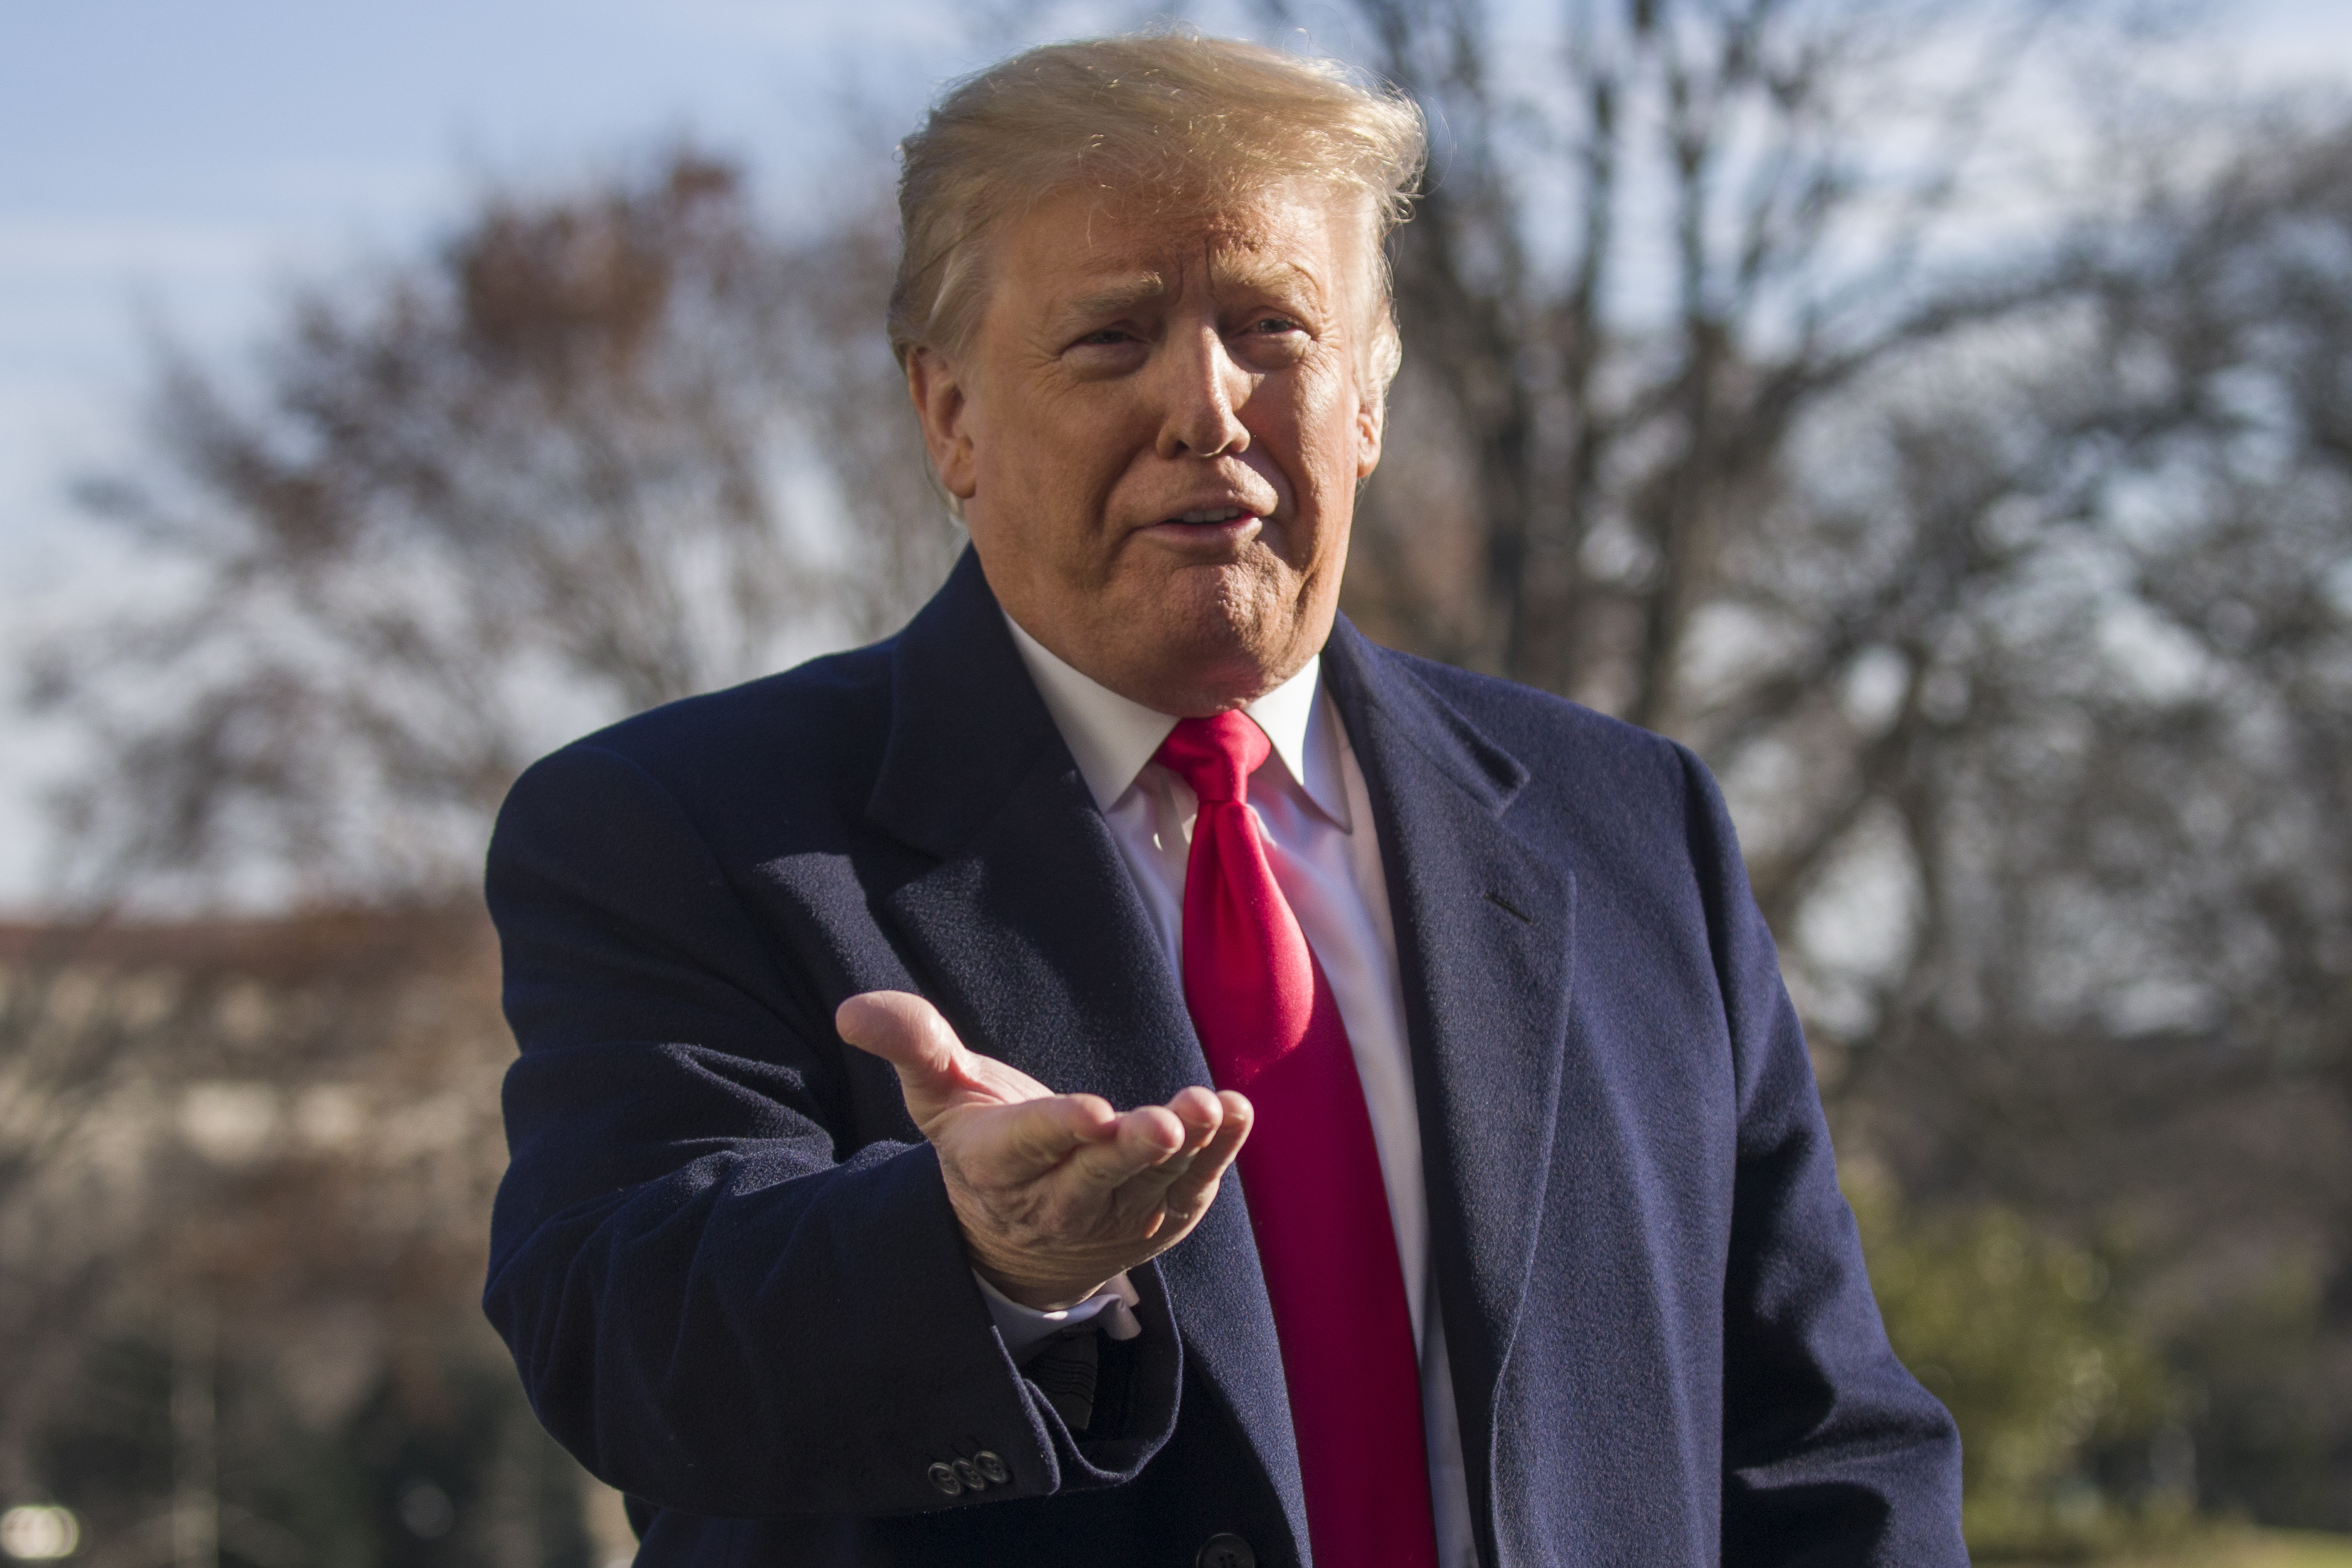 AP FACT CHECK: Do ex-presidents back Trump wall? They say no